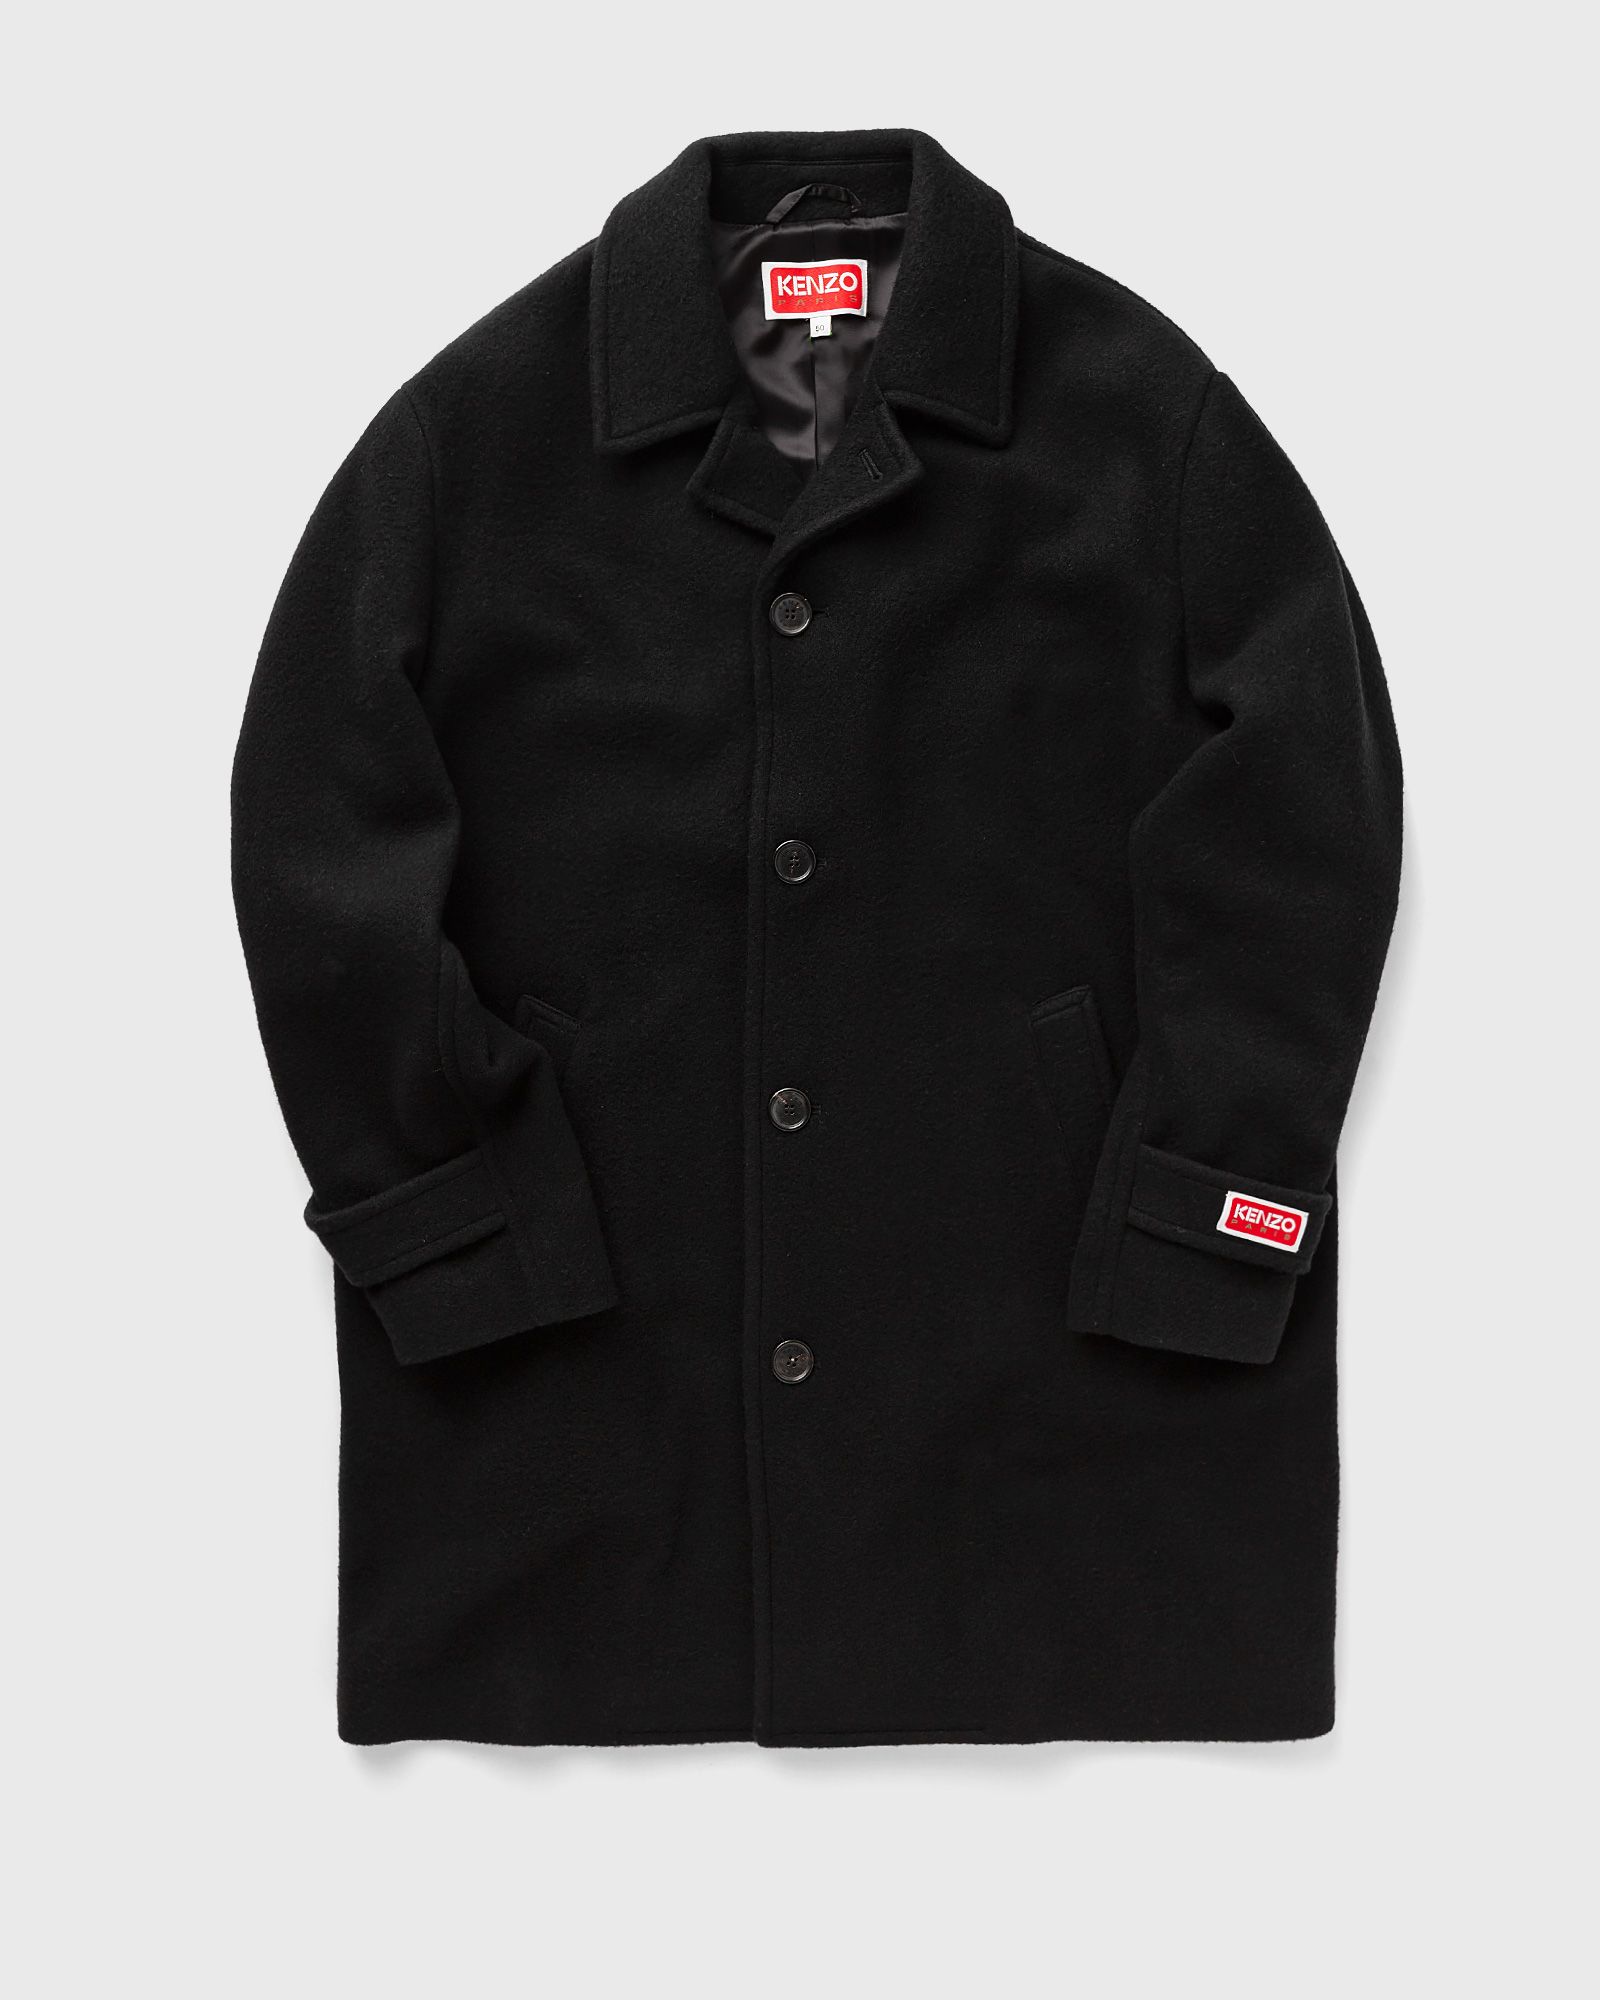 Kenzo - classic mid coat men coats black in größe:3xl